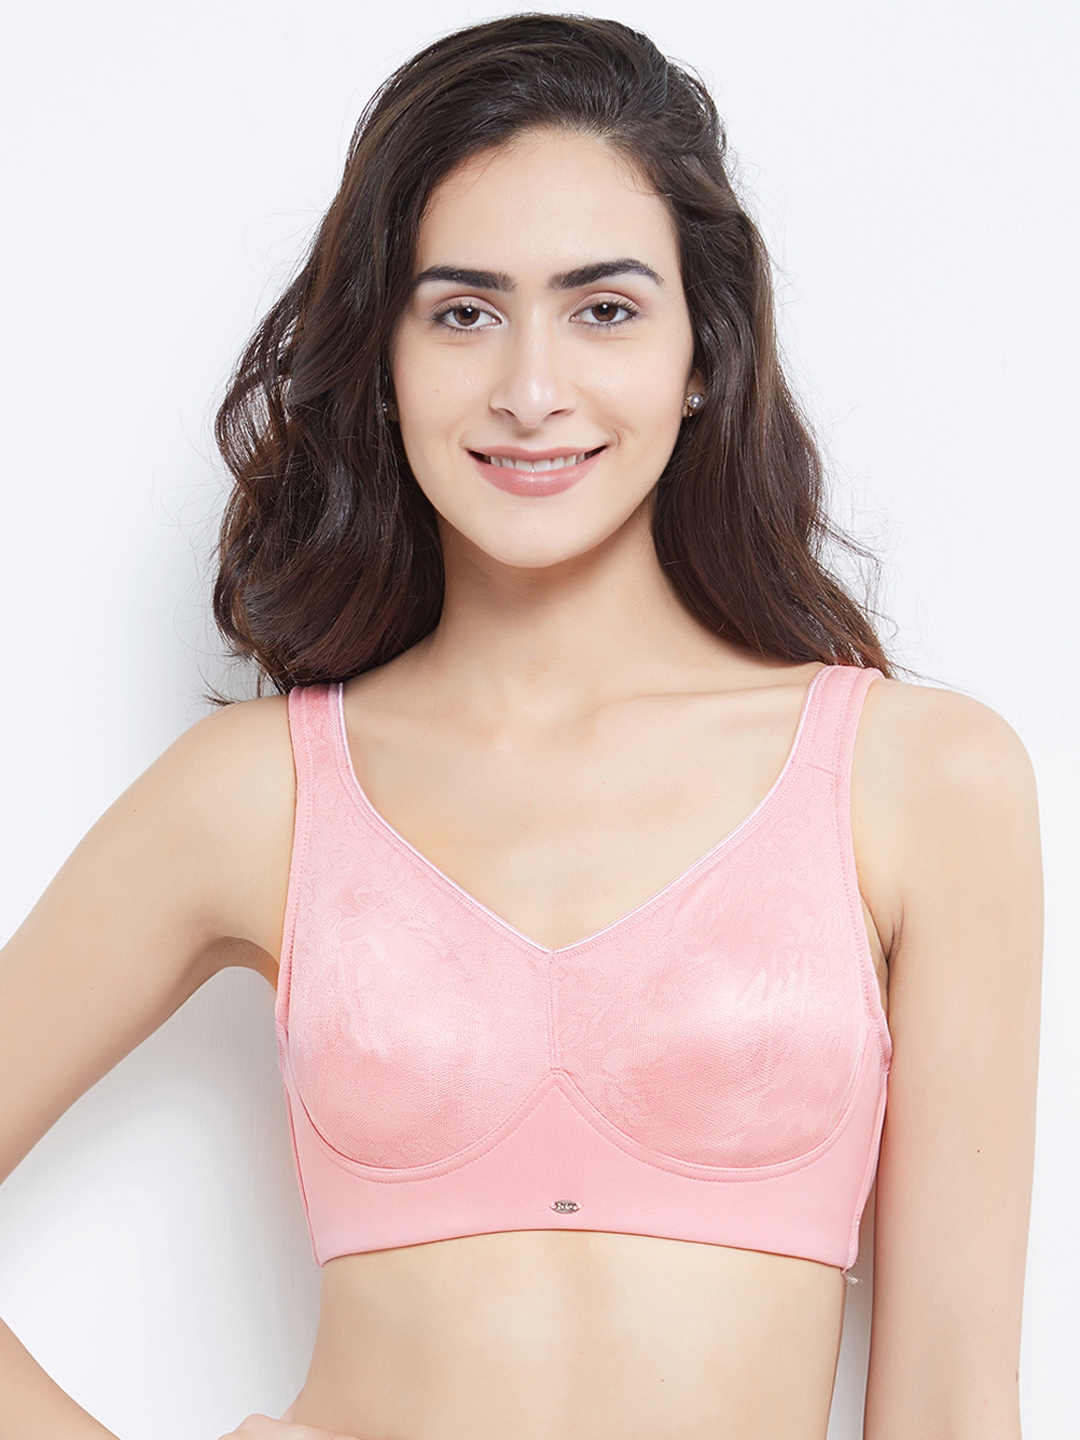 Buy online Non Padded Minimizer Bra from lingerie for Women by